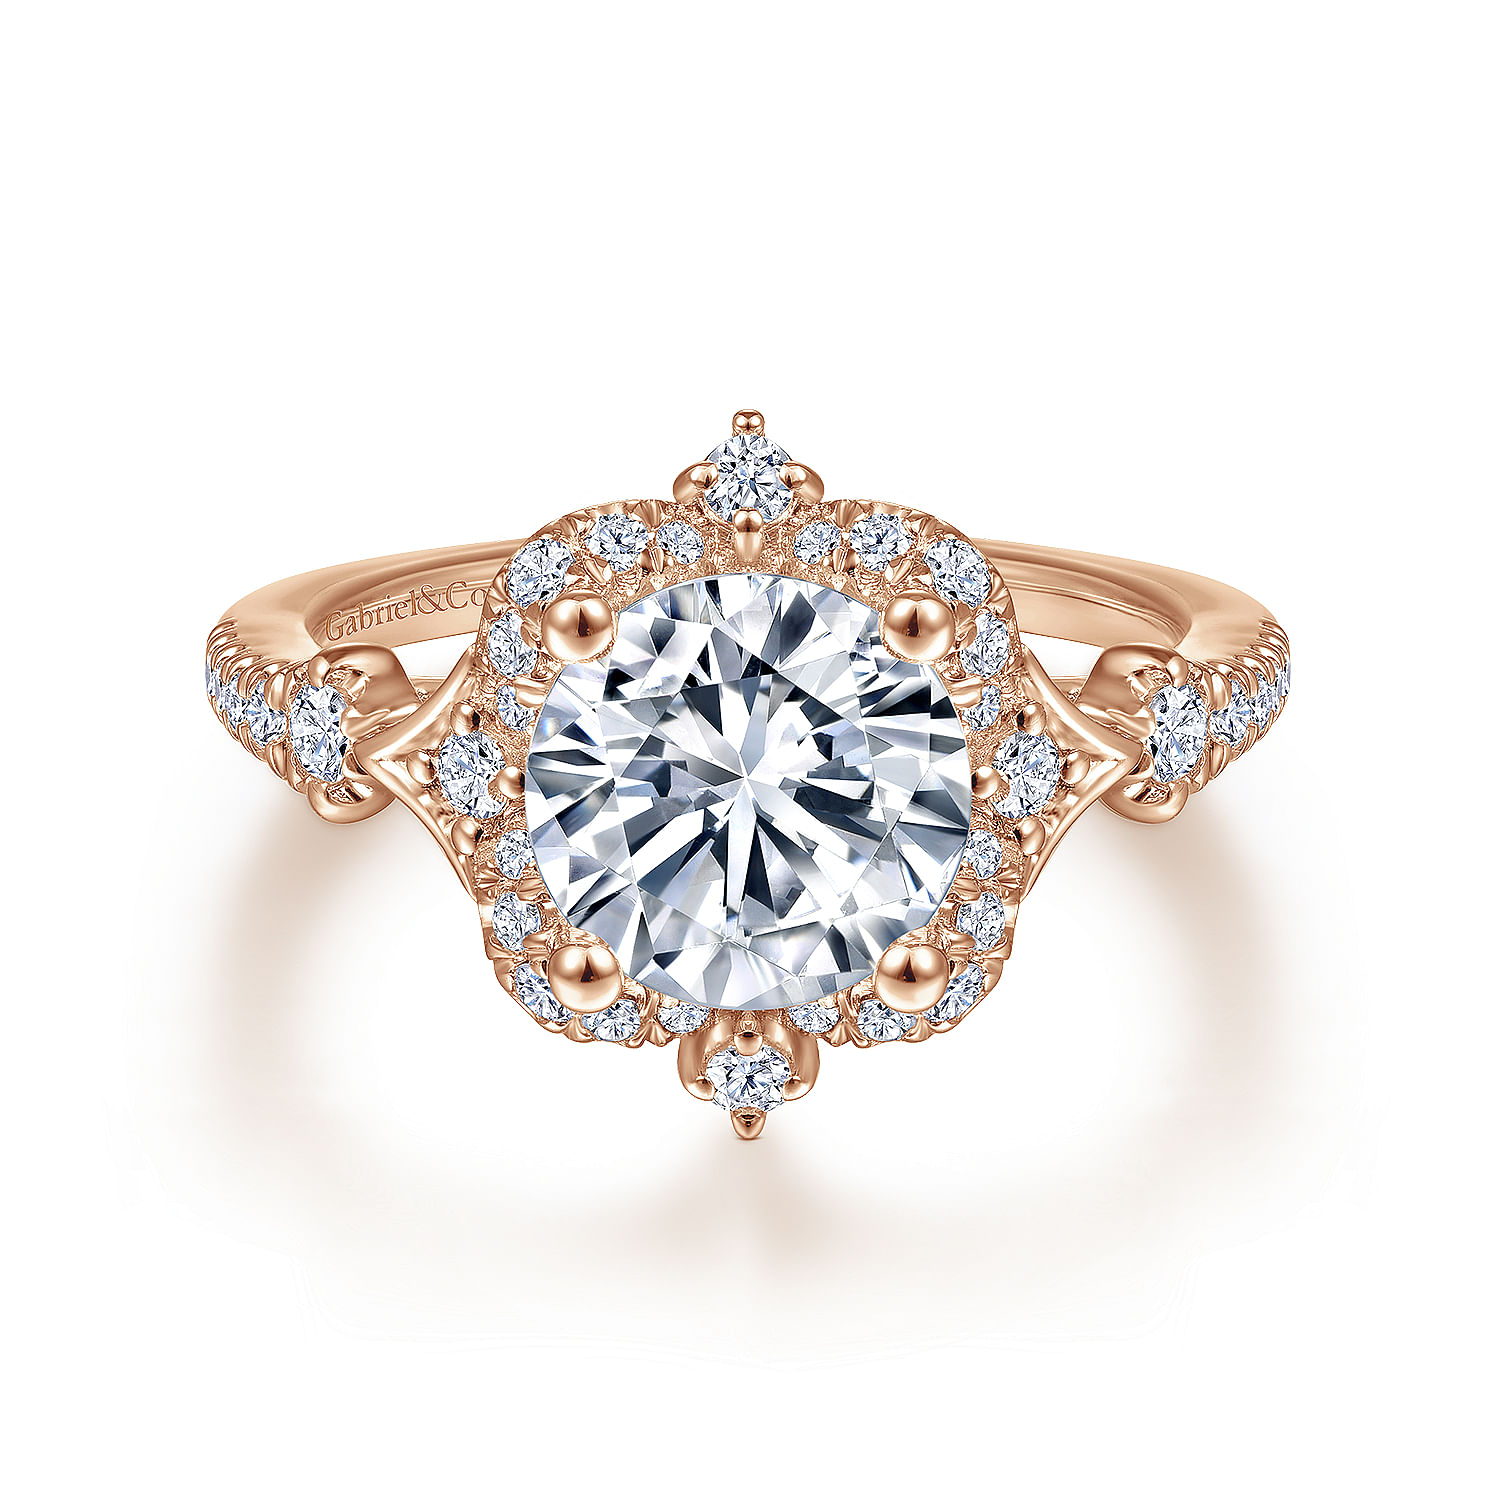 Gabriel - Unique 14K Rose Gold Vintage Inspired Halo Diamond Engagement Ring